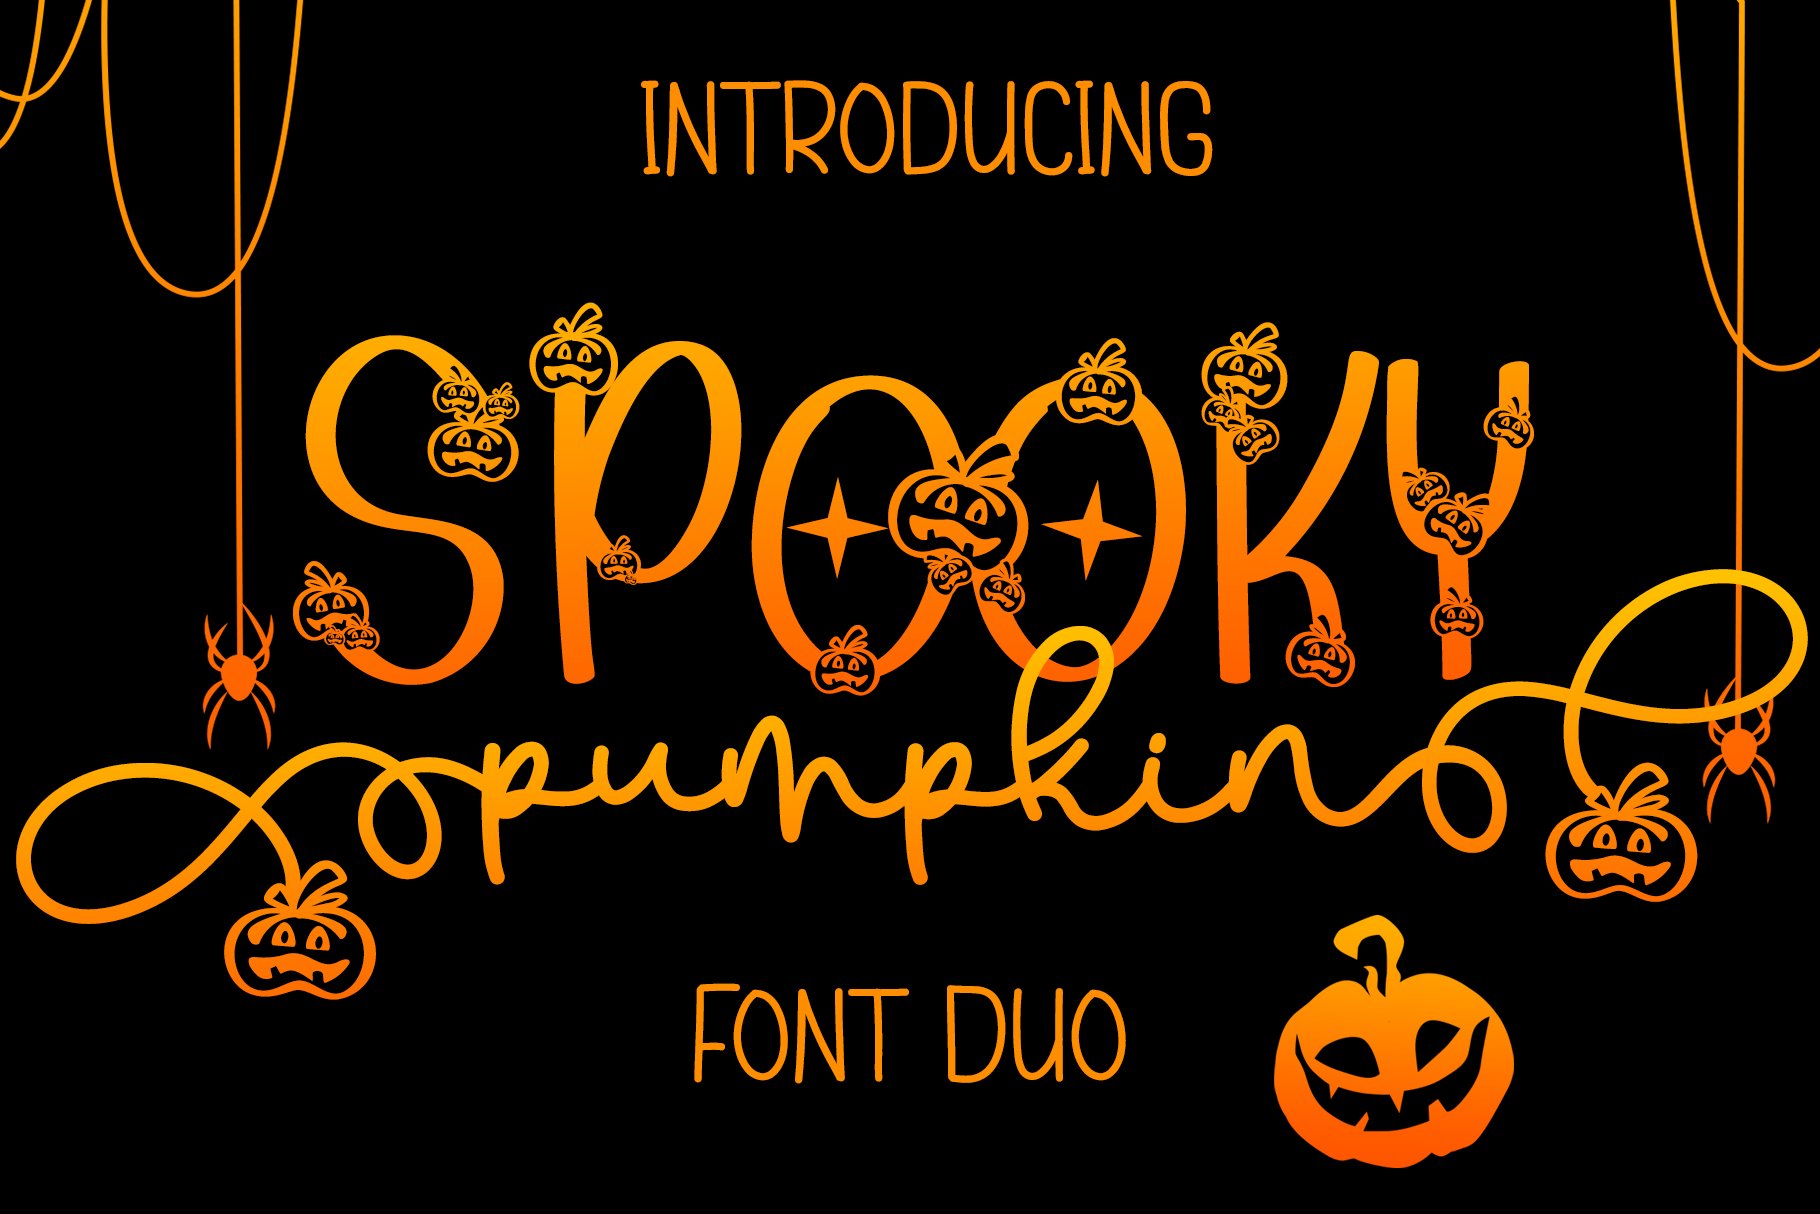 Spooky Pumpkin | Halloween Font cover image.